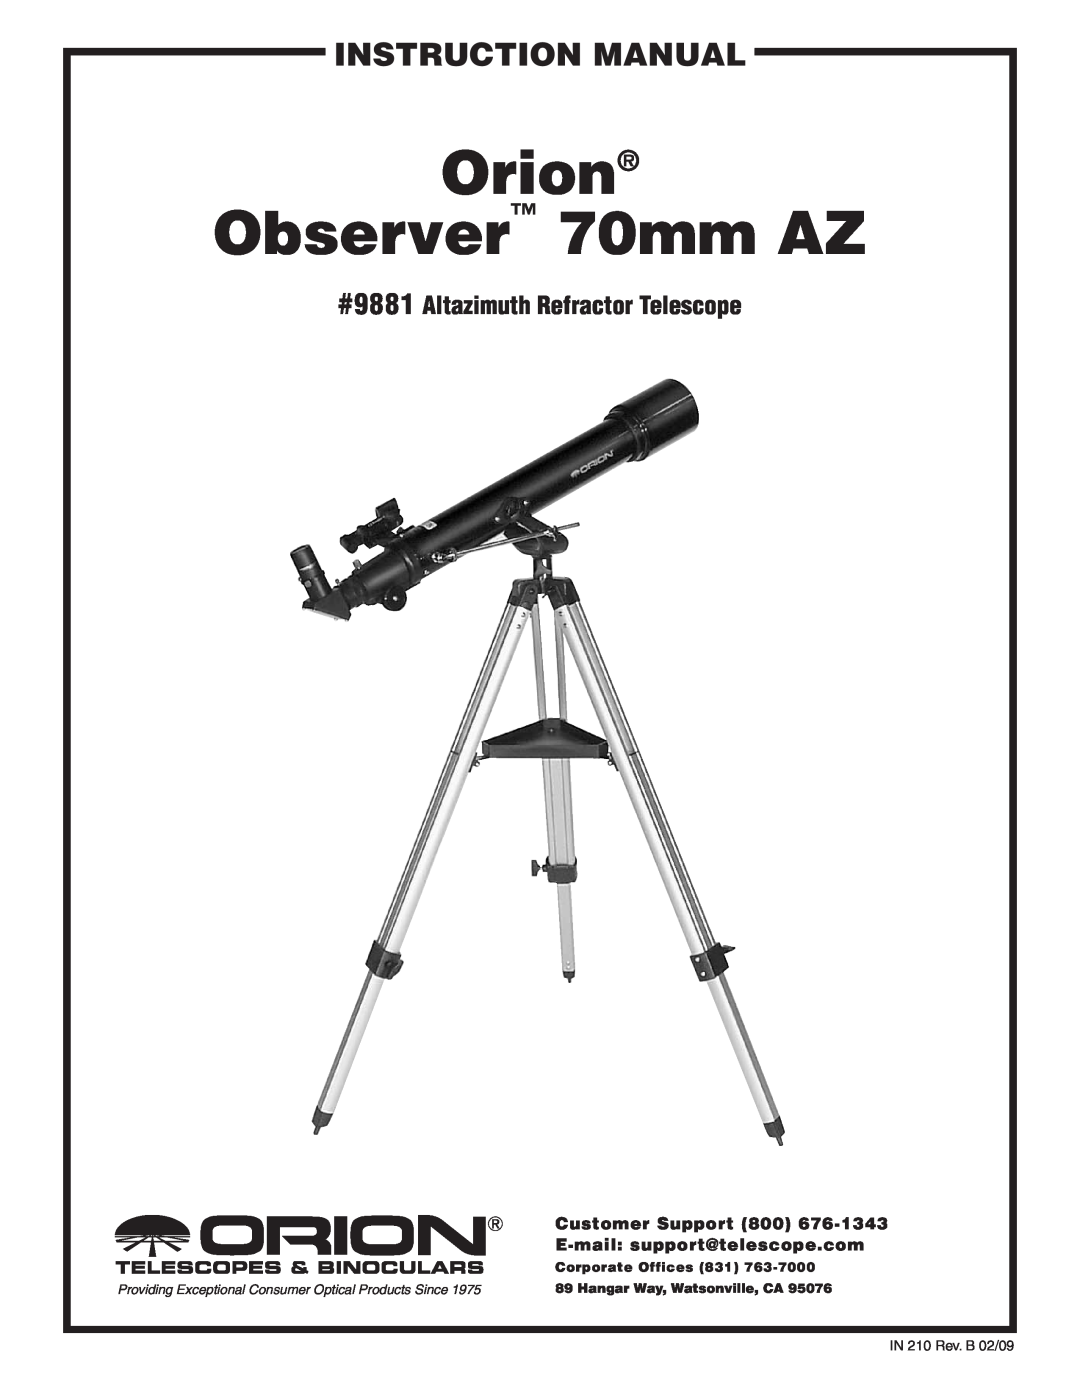 Orion 70MM AZ instruction manual #9881 Altazimuth Refractor Telescope, Orion Observer 70mm AZ, Customer Support 